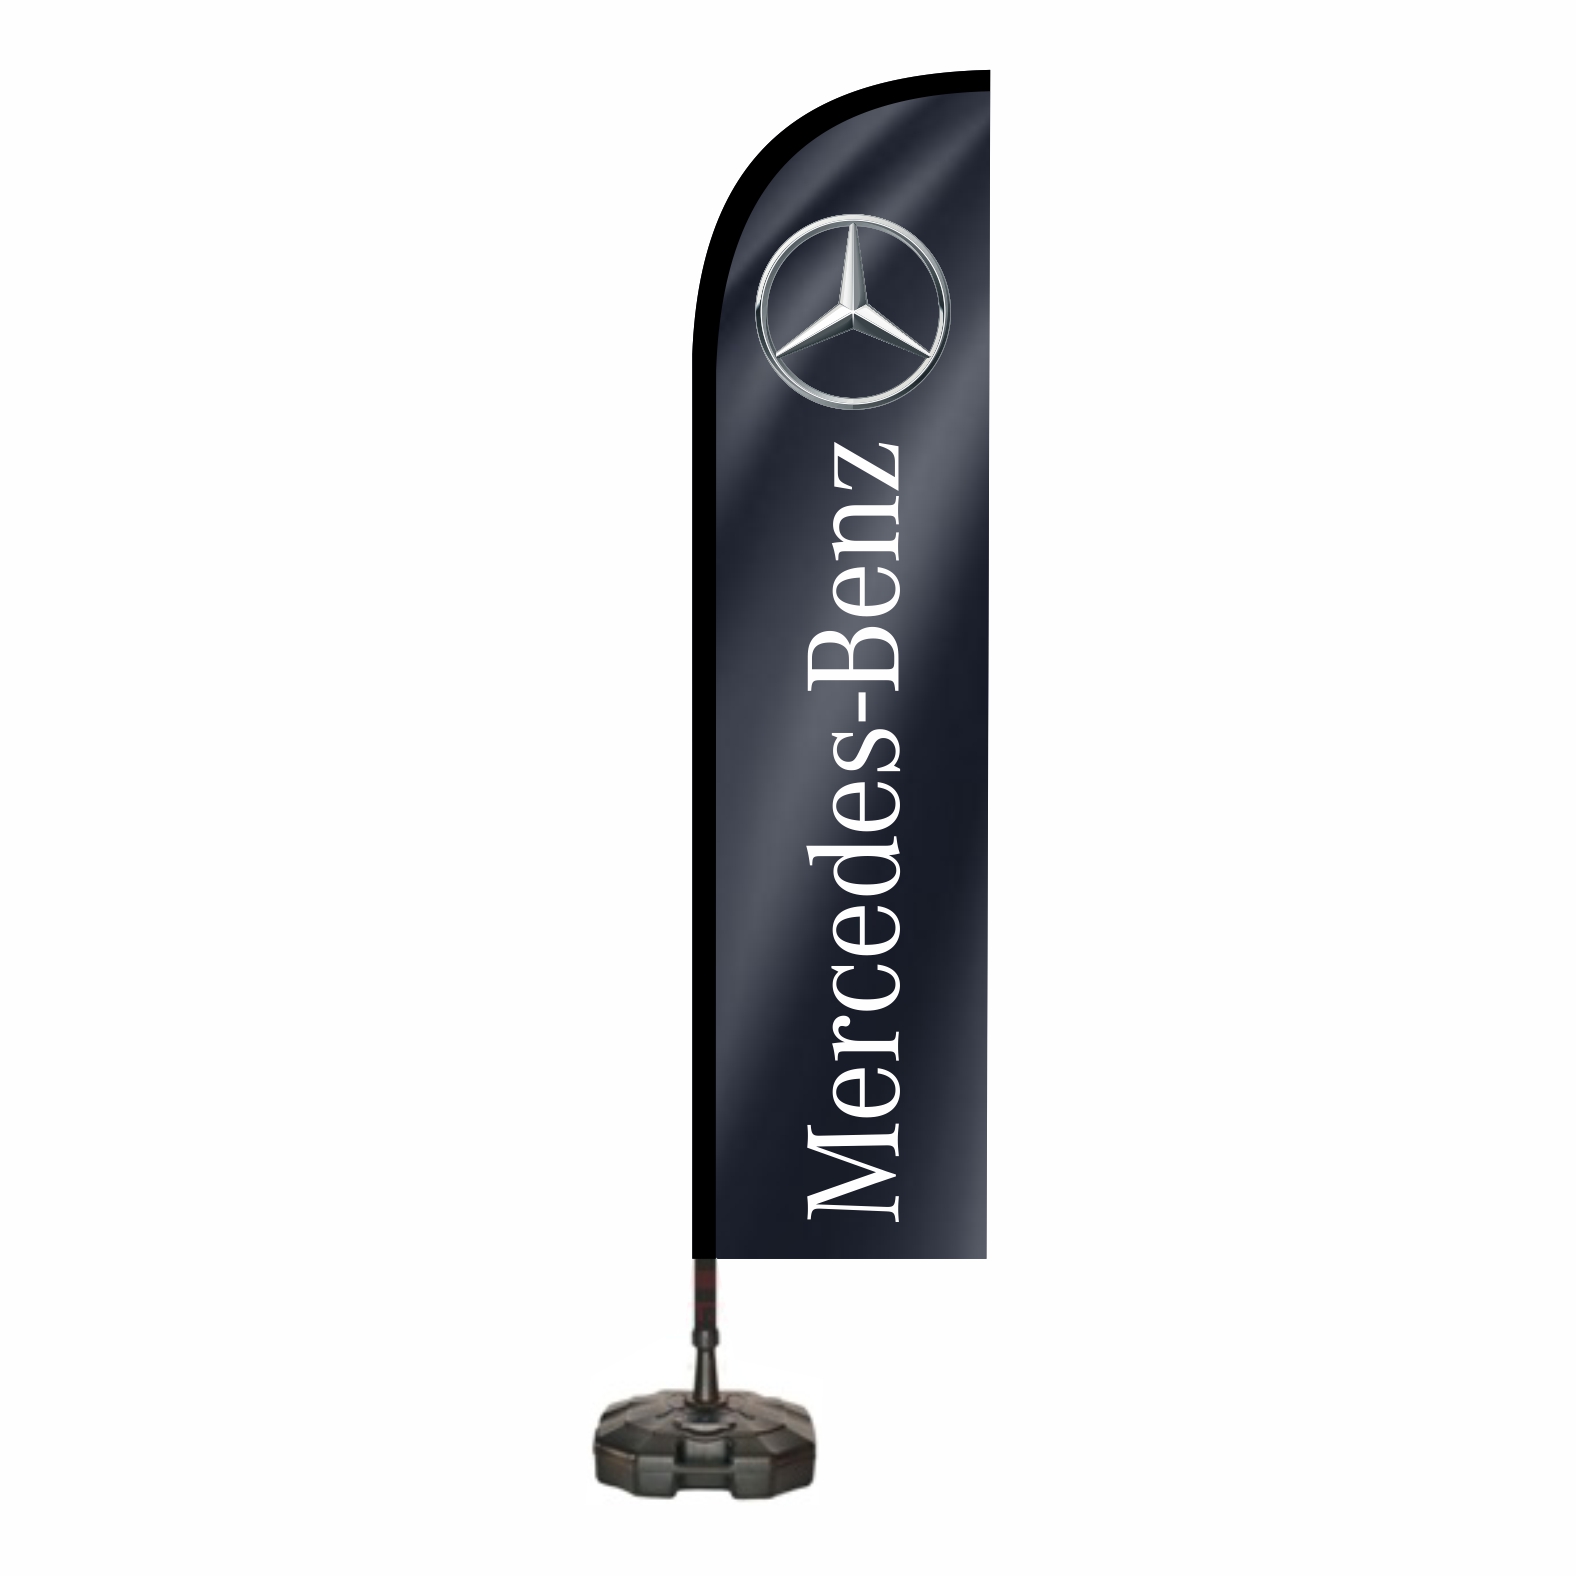 Mercedes Benz Yelken Bayraklar Tasarm